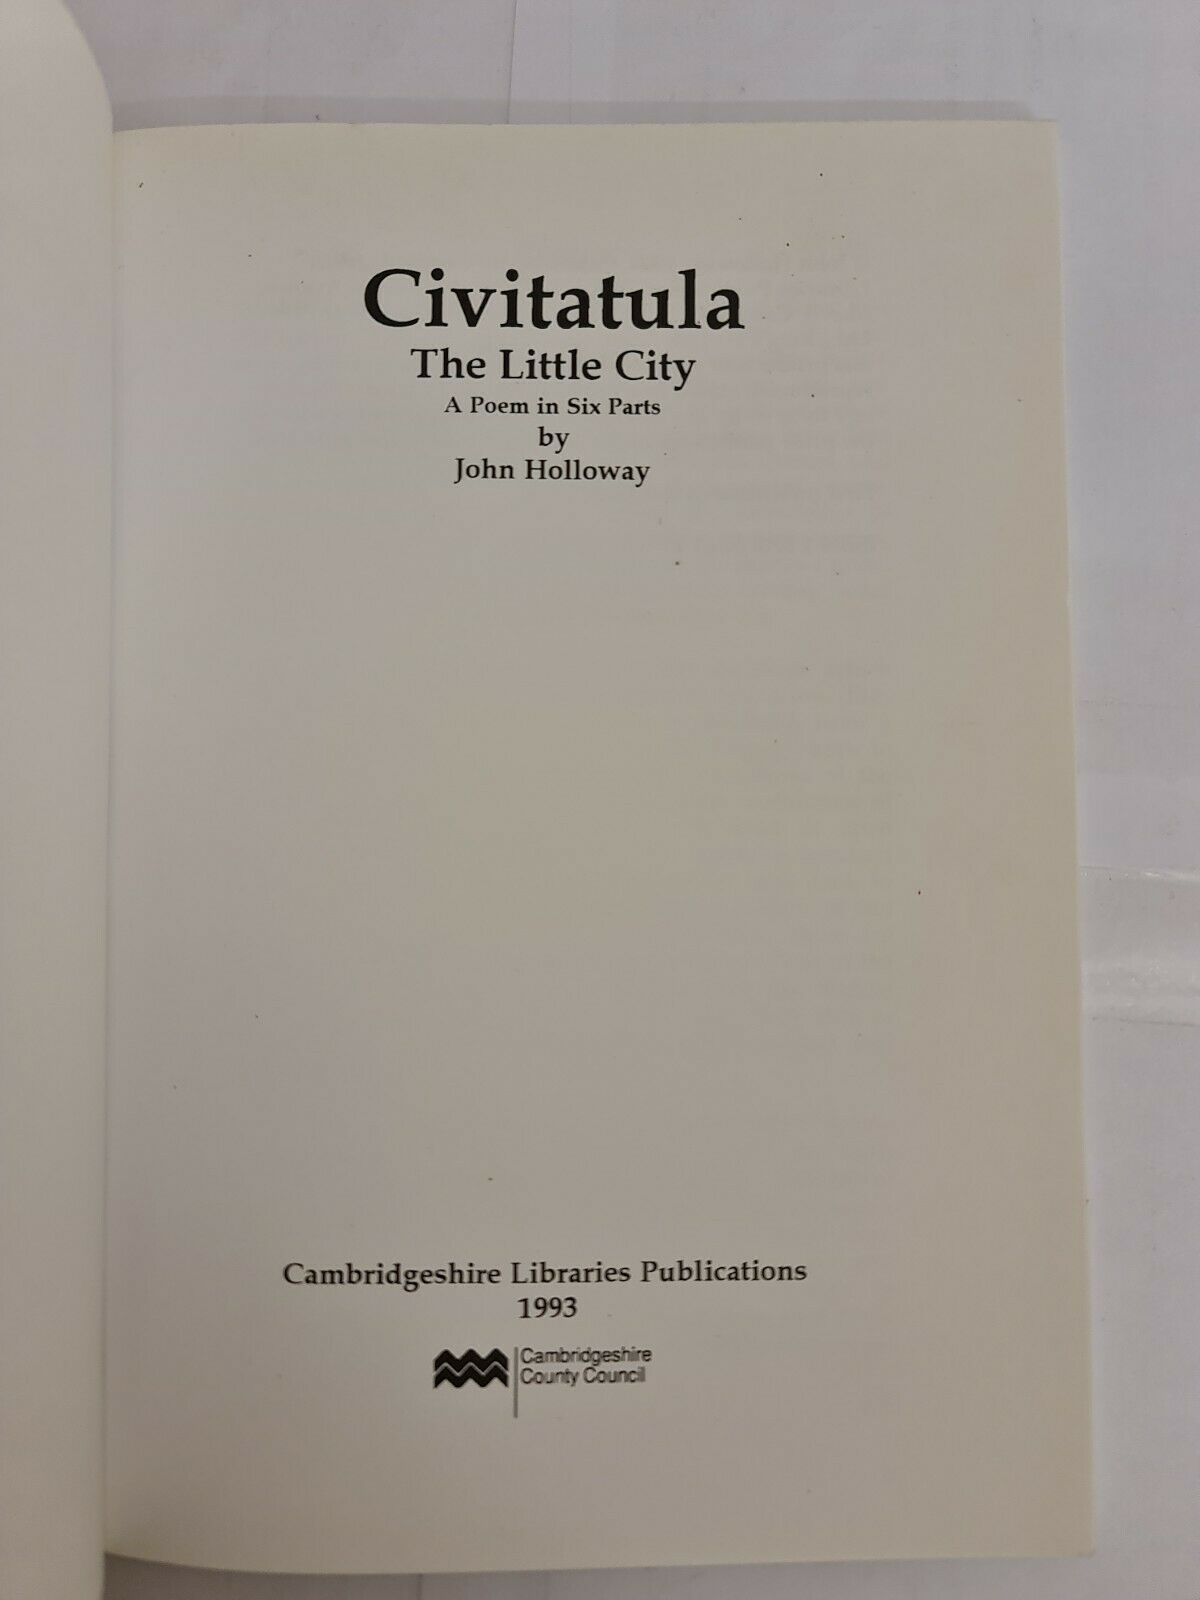 Civitatula: Cambridge, the Little City - A Poem in Six Parts by John Holloway